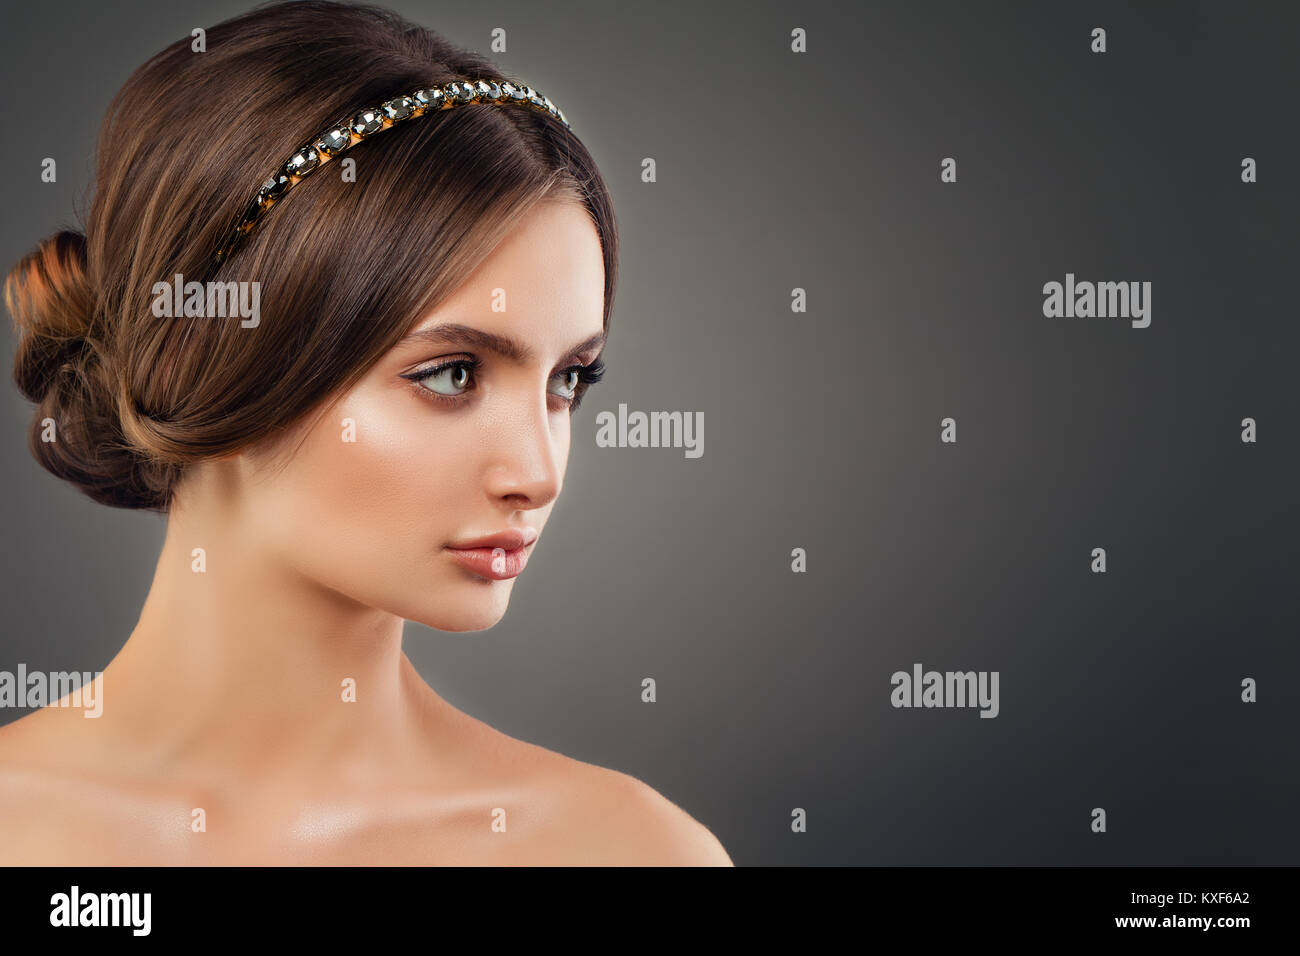 Nice Woman Fashion Model with Makeup and Diamond Hair decor, Fashion Portrait Stock Photo